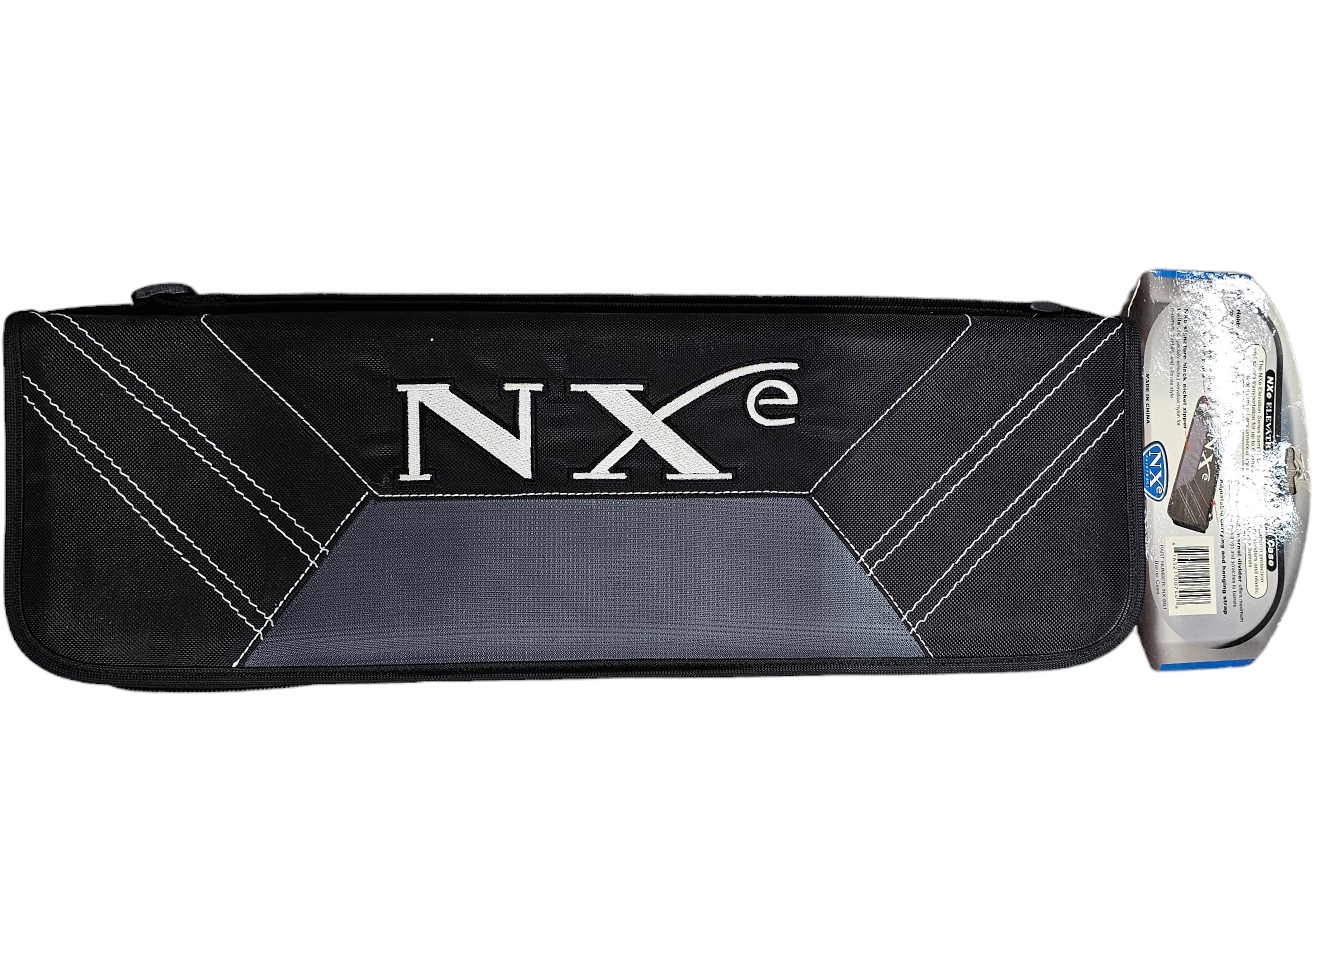 NXe Barrel Bag - USED